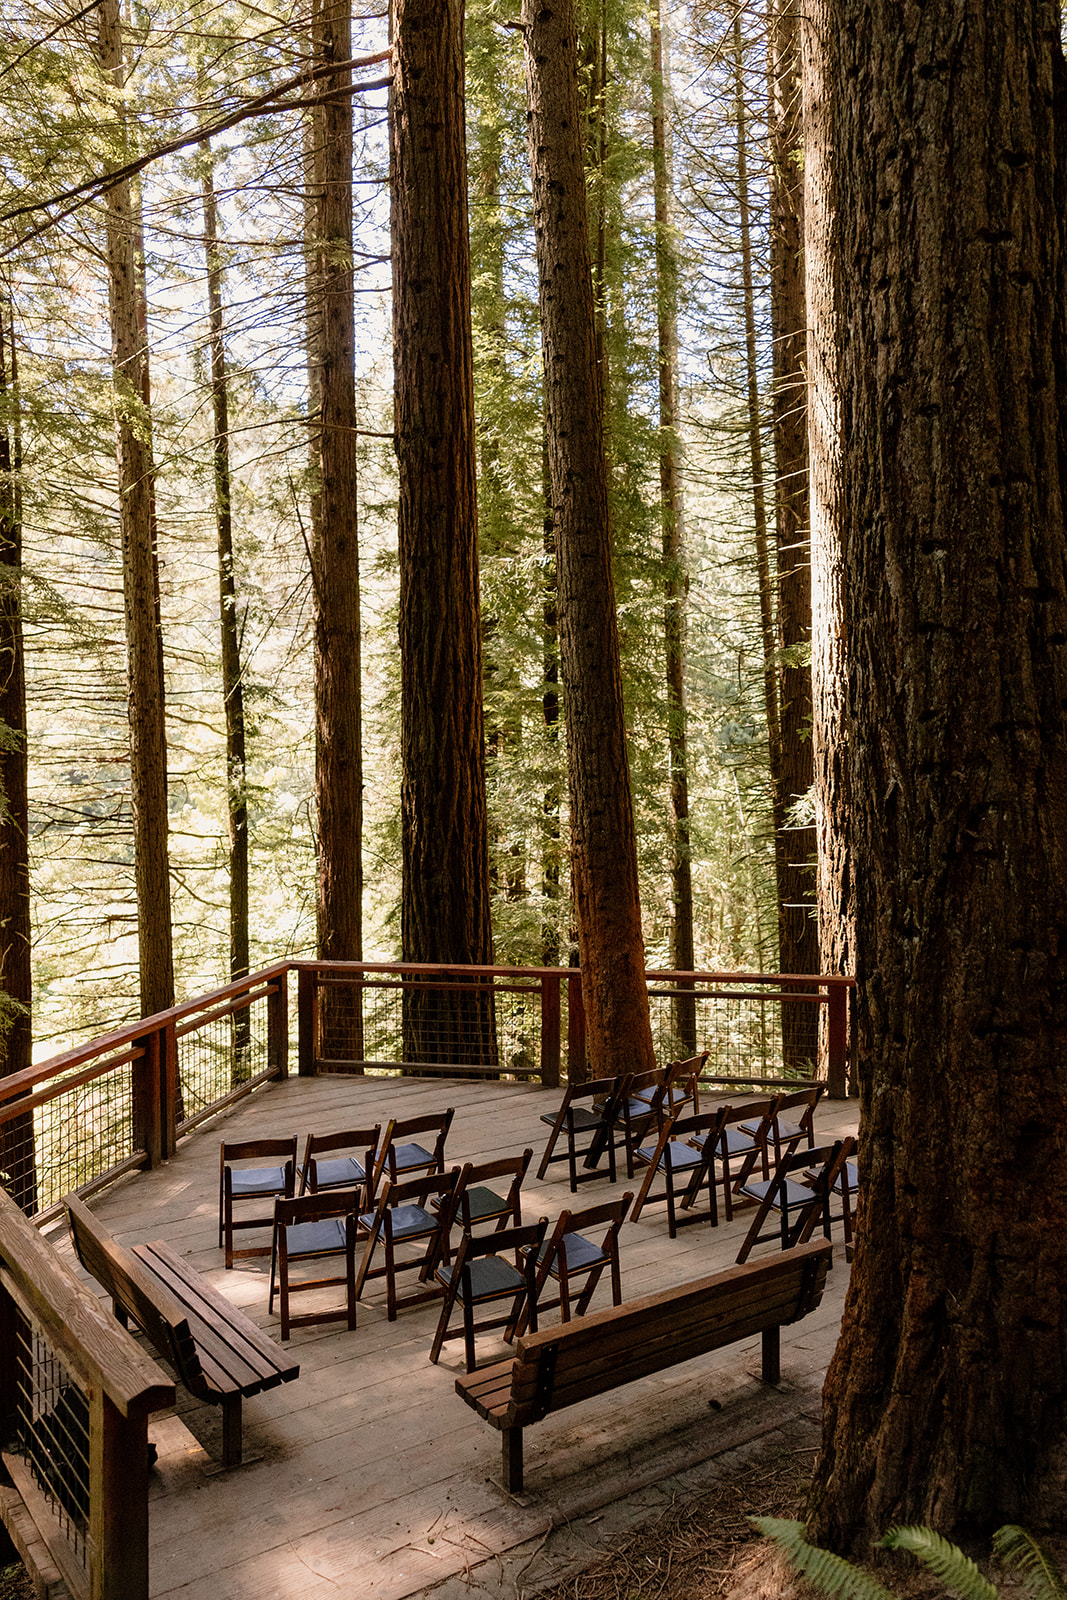 A wedding ceremony setup at the Redwood Deck in Hoyt Arboretum. 